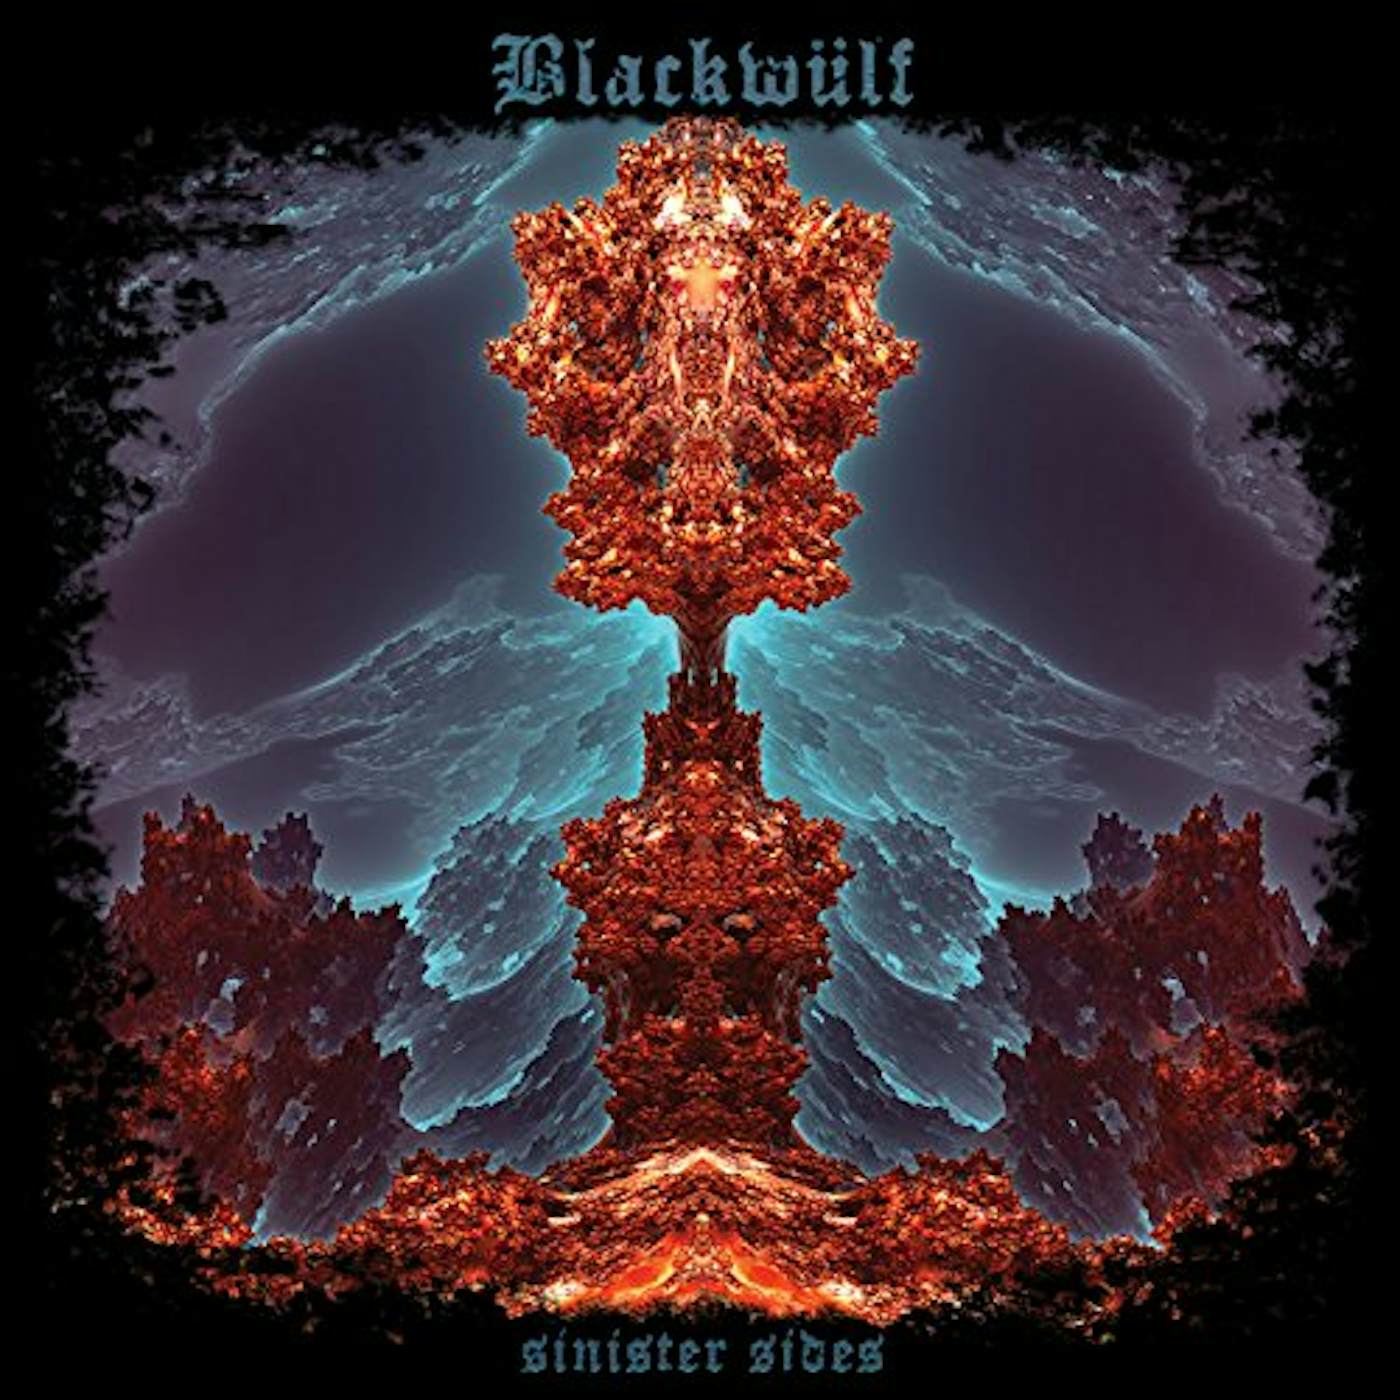 Blackwülf Sinister Sides Vinyl Record